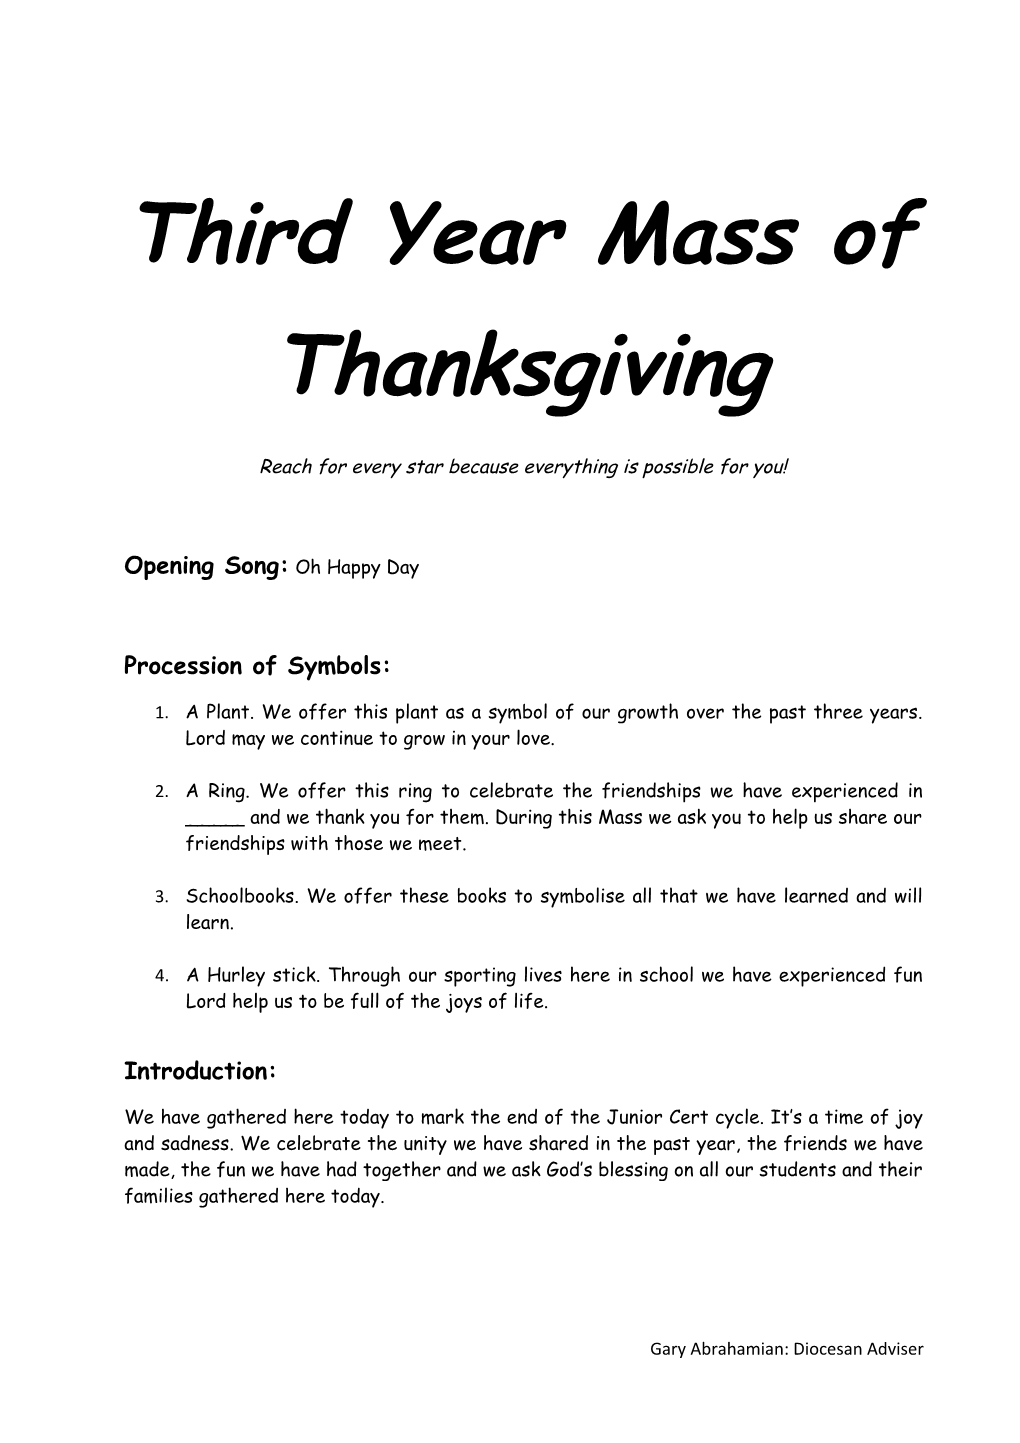 Third Year Mass of Thanksgiving